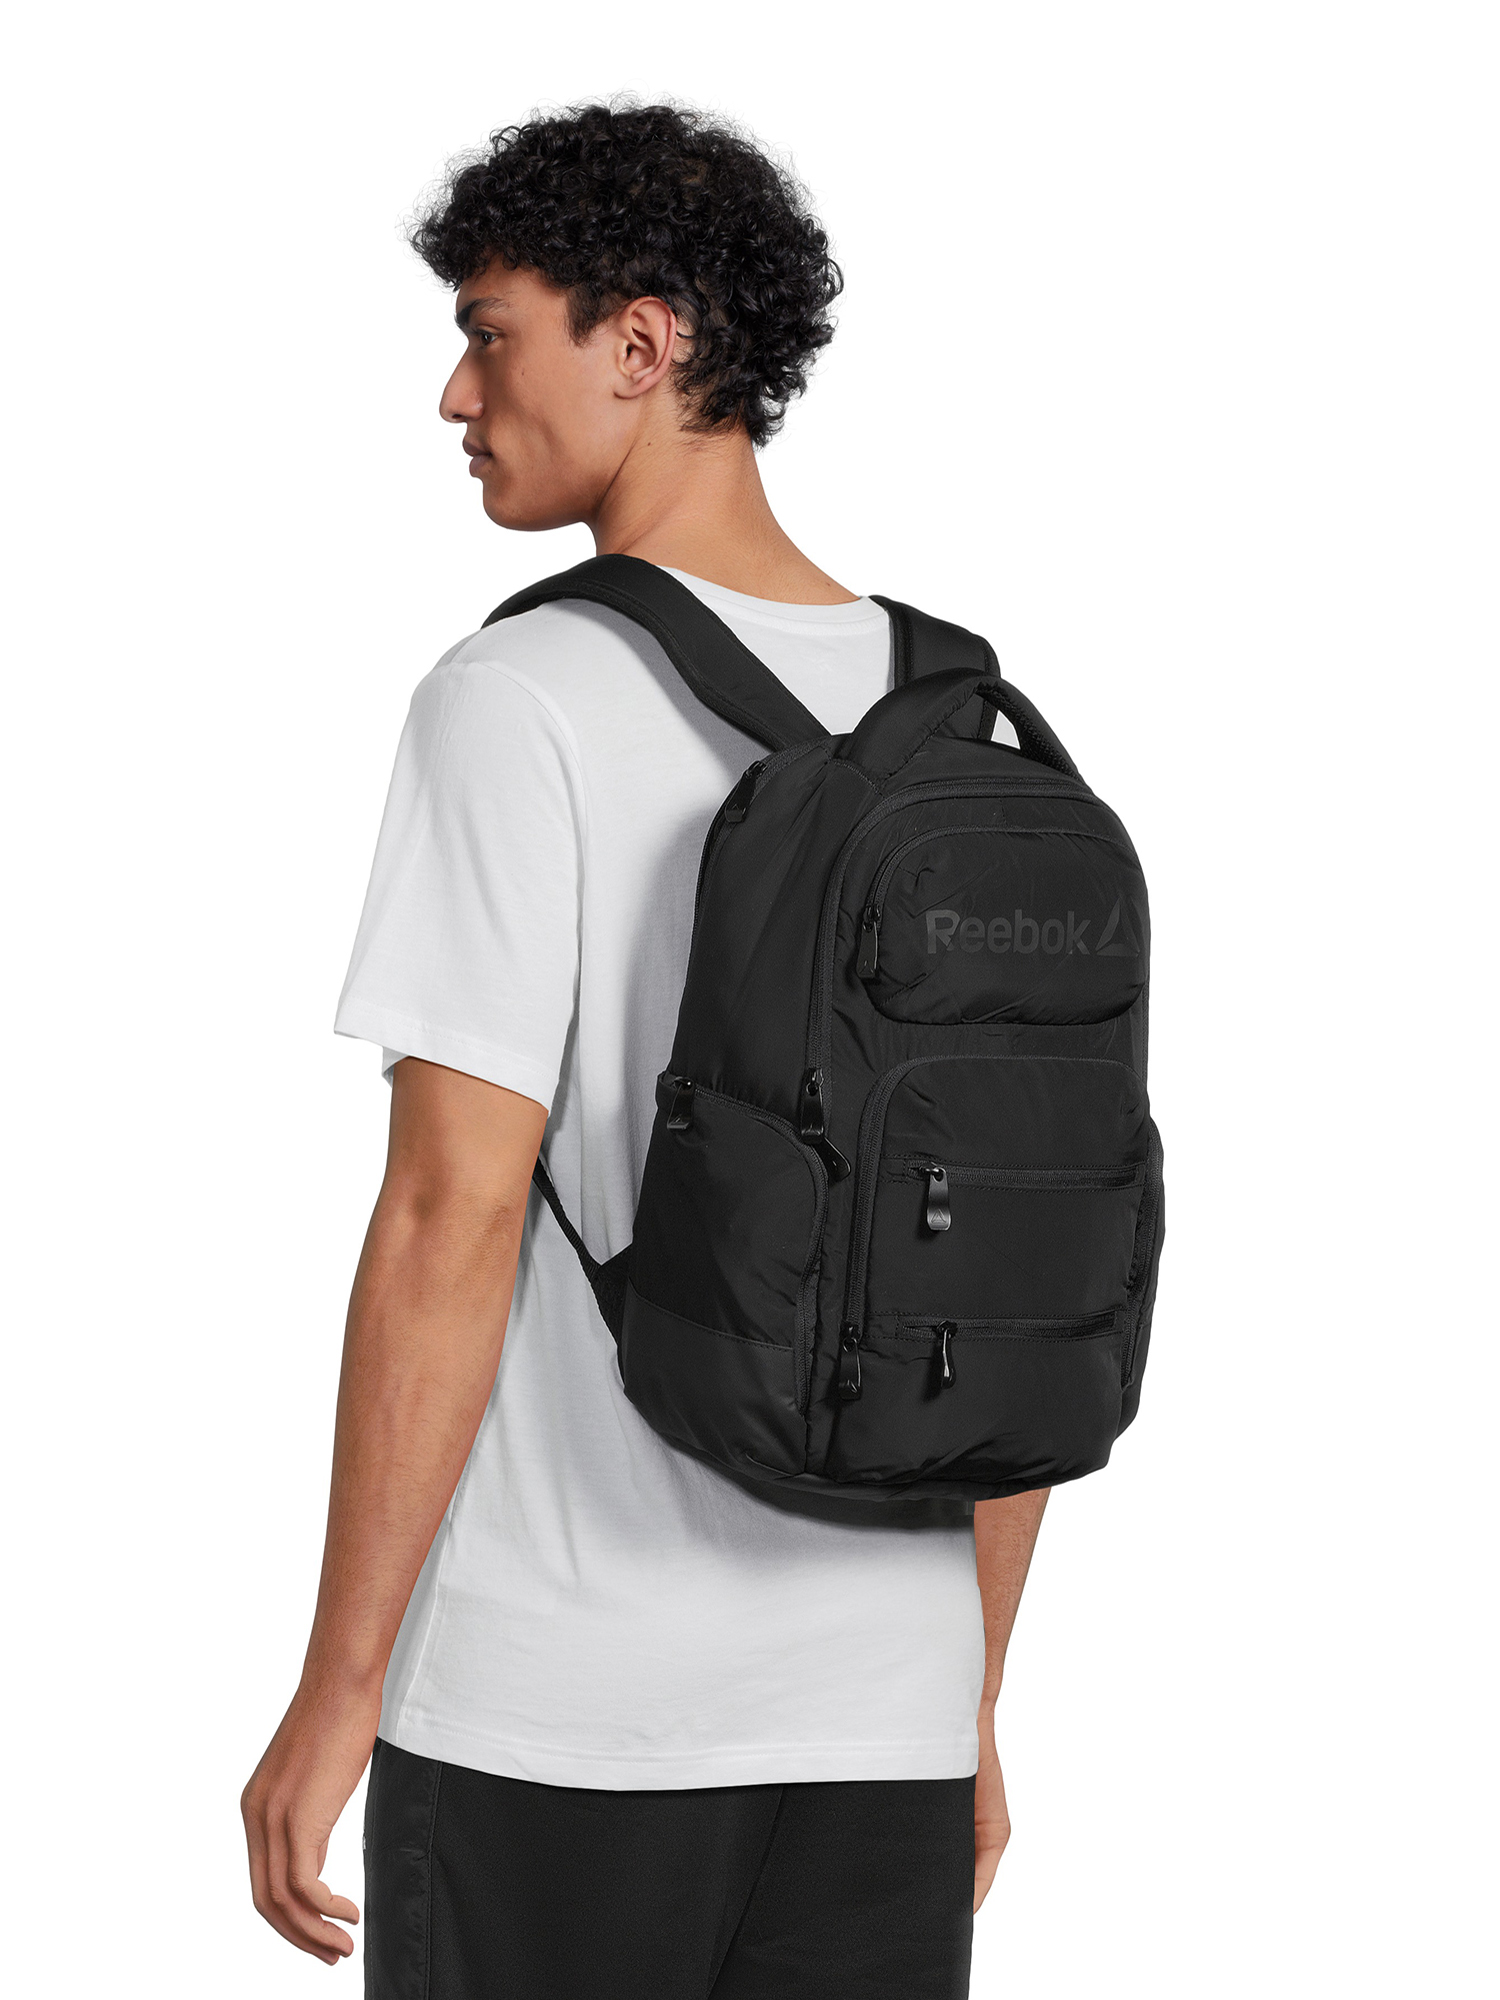 Reebok Unisex Adult Winter 16" Laptop Backpack, Black - image 3 of 6